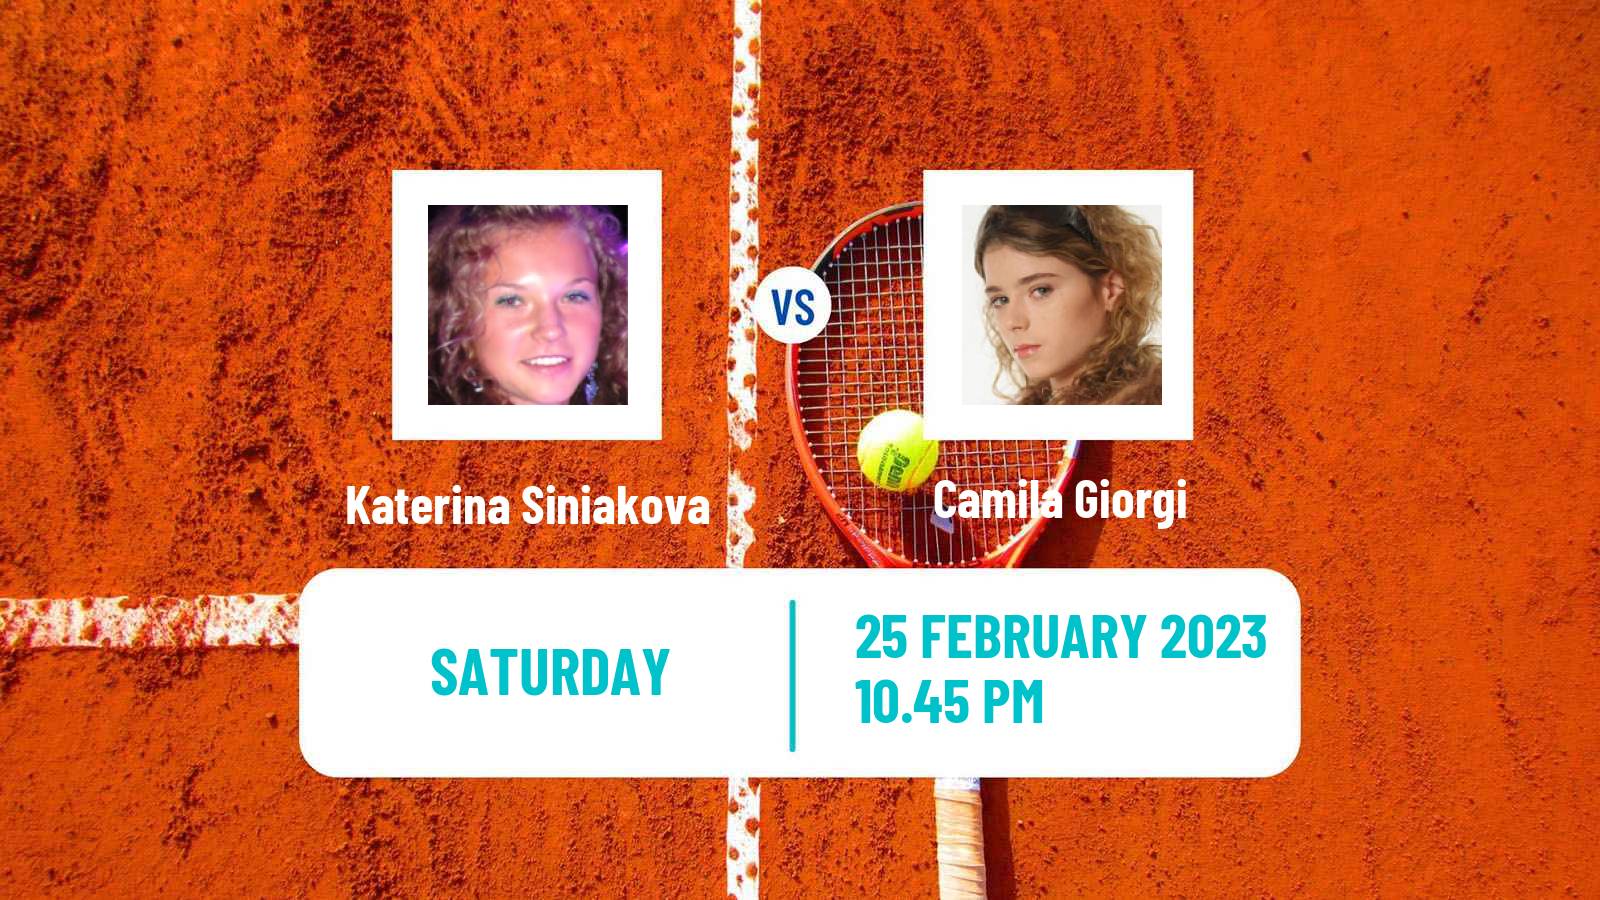 Tennis WTA Merida Katerina Siniakova - Camila Giorgi